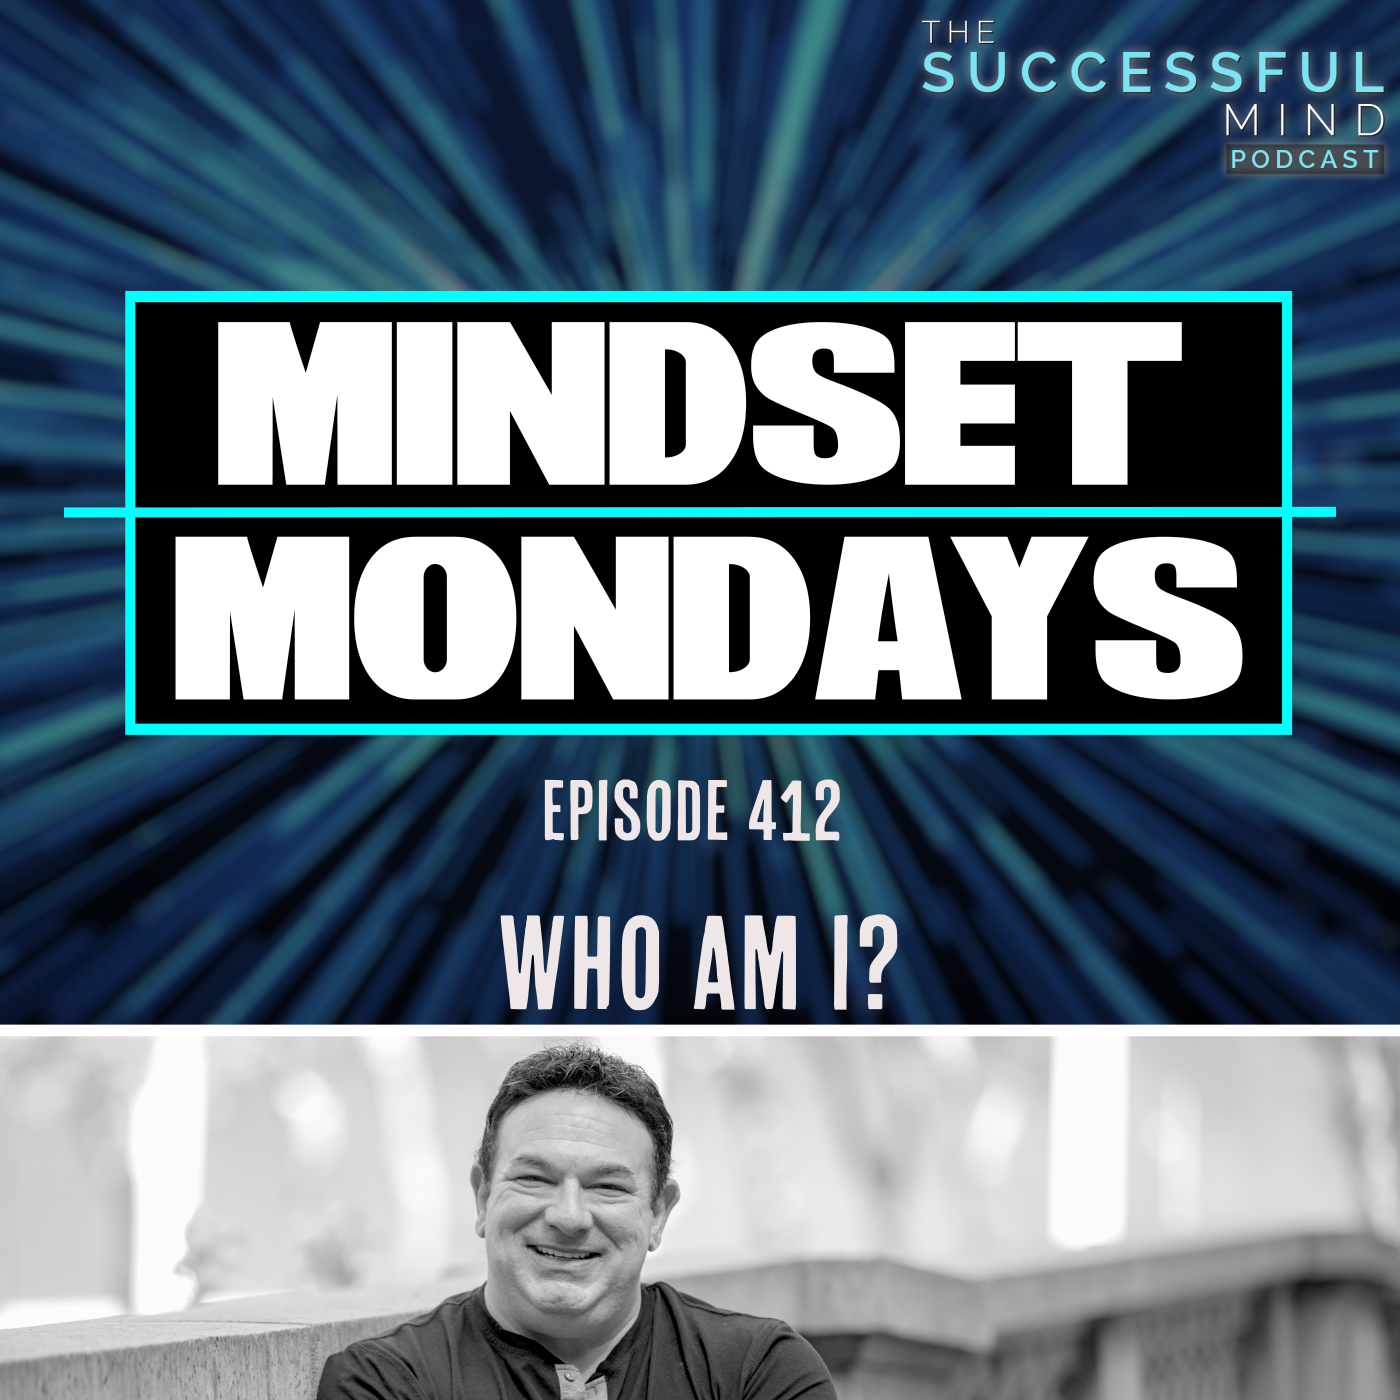 The Successful Mind Podcast - Mindset Mondays - Who Am I?